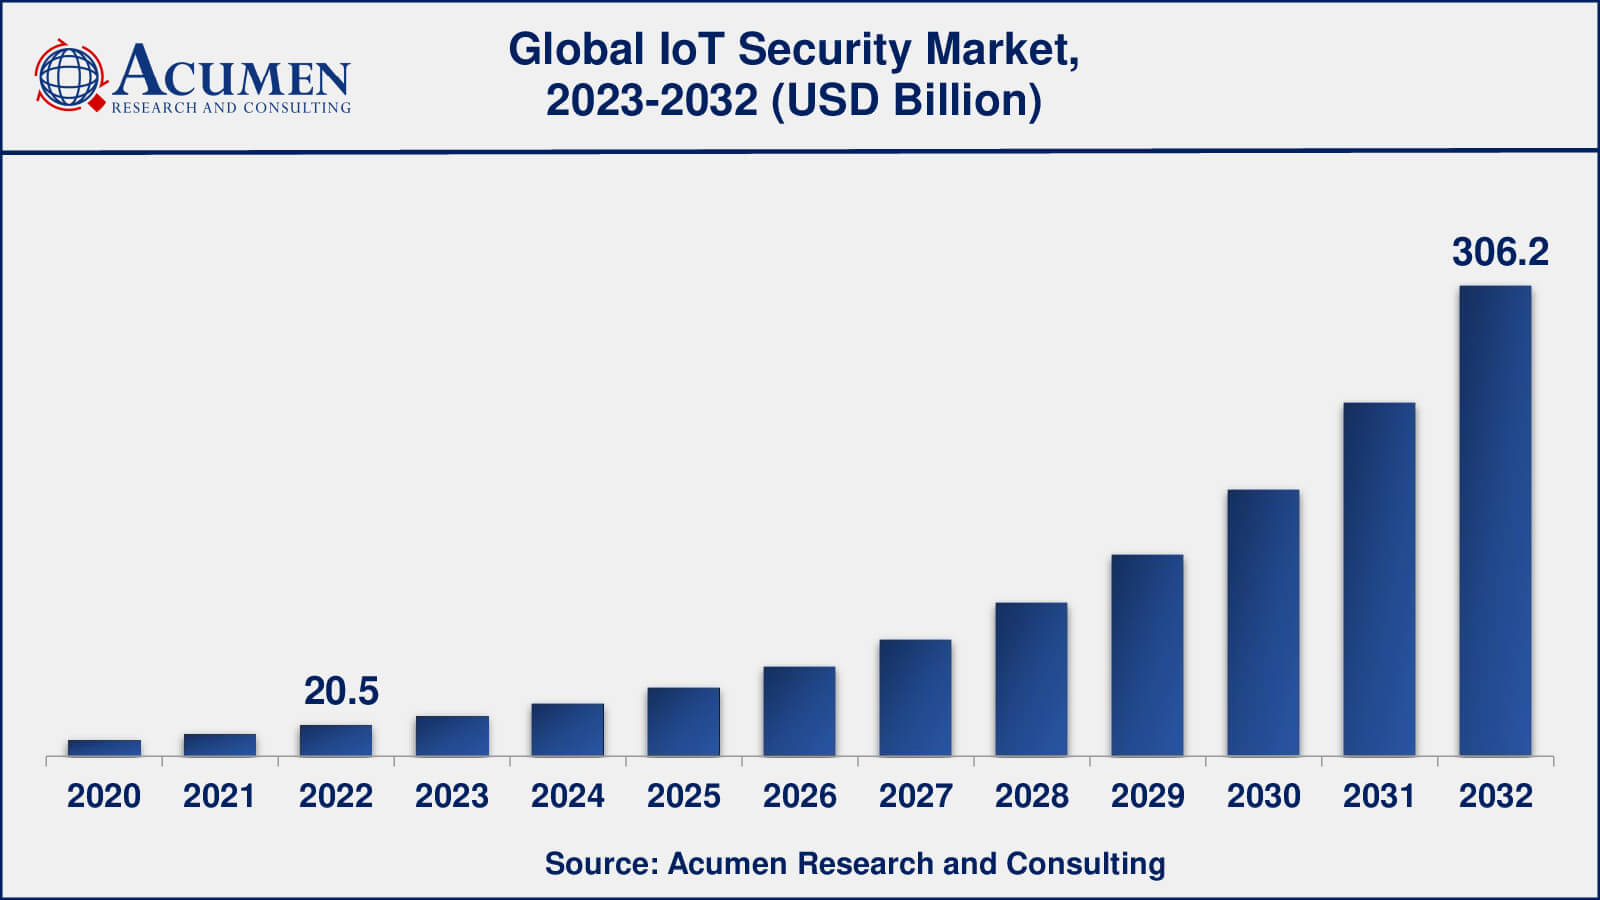 Global IoT Security Market Dynamics